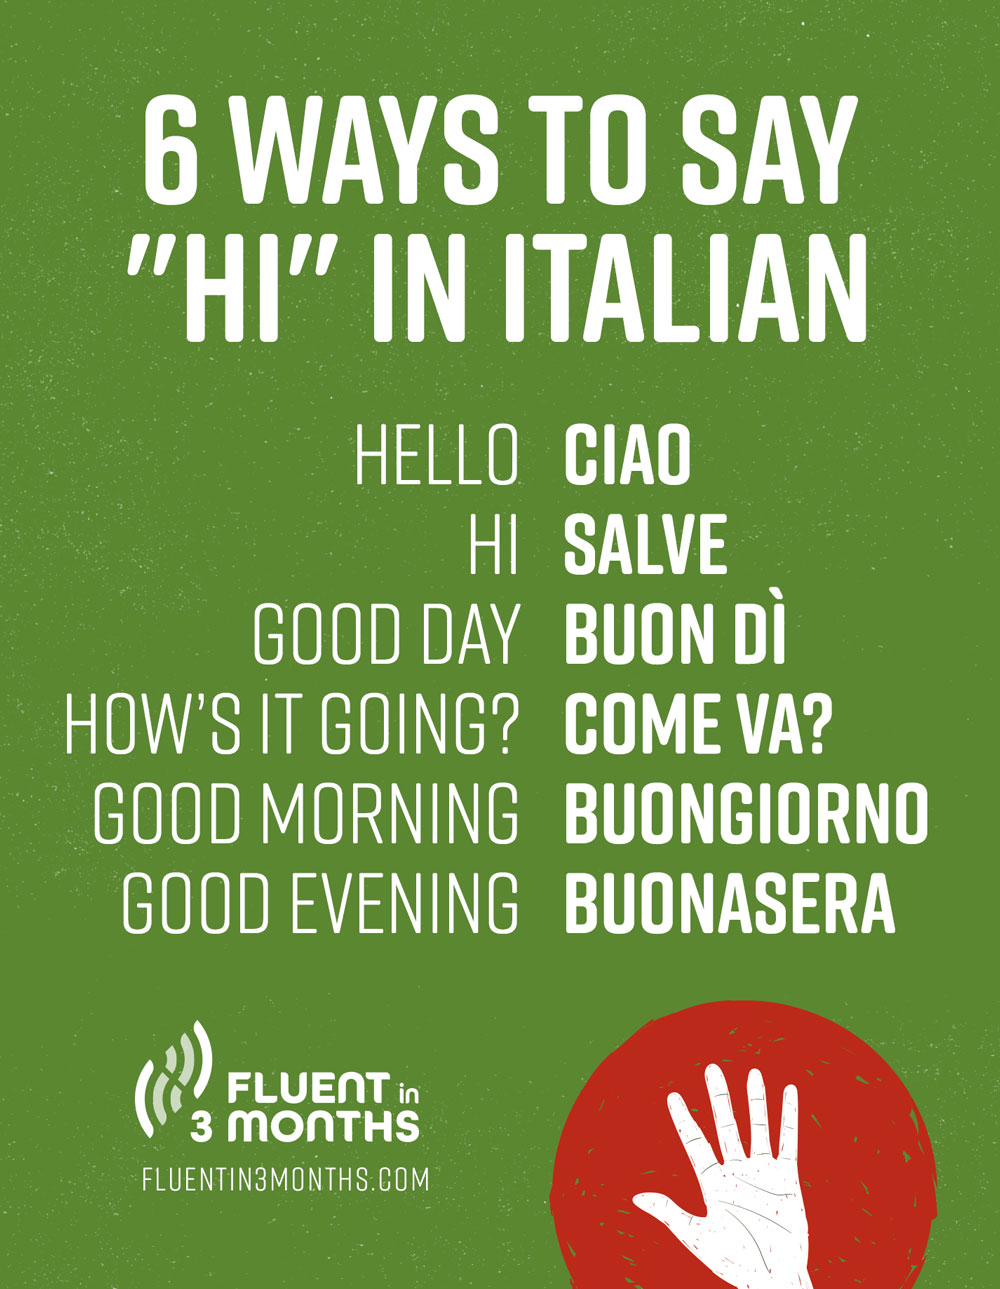 How to Say “Hello” in Italian: 19 Italian Greetings